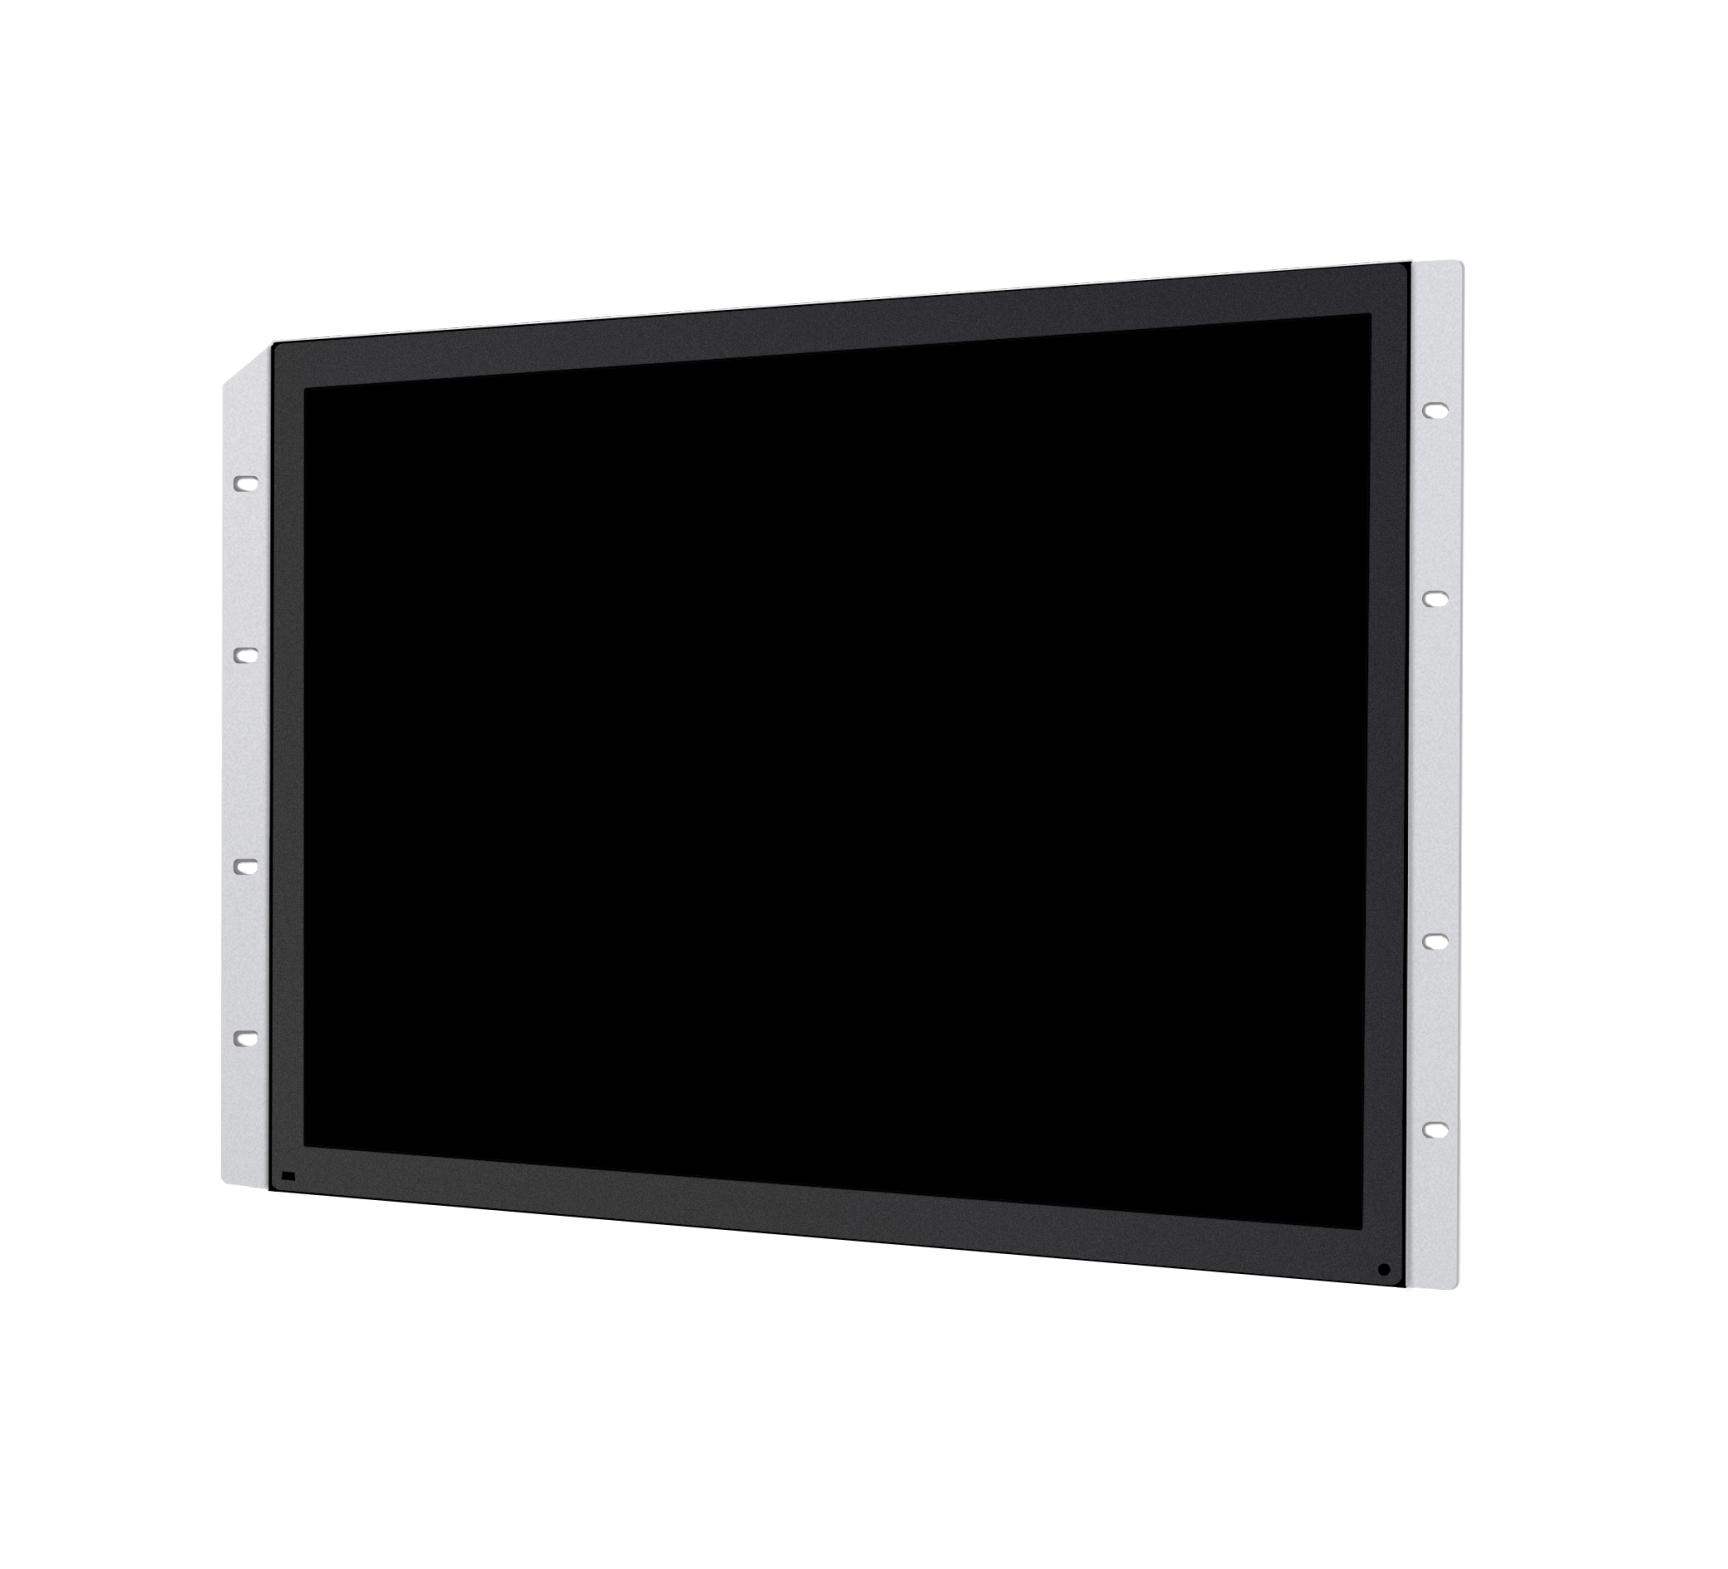 ULM17 UNICO PHOENIX SERIES OF ARCADE CRT REPLACEMENT LCD MONITORS